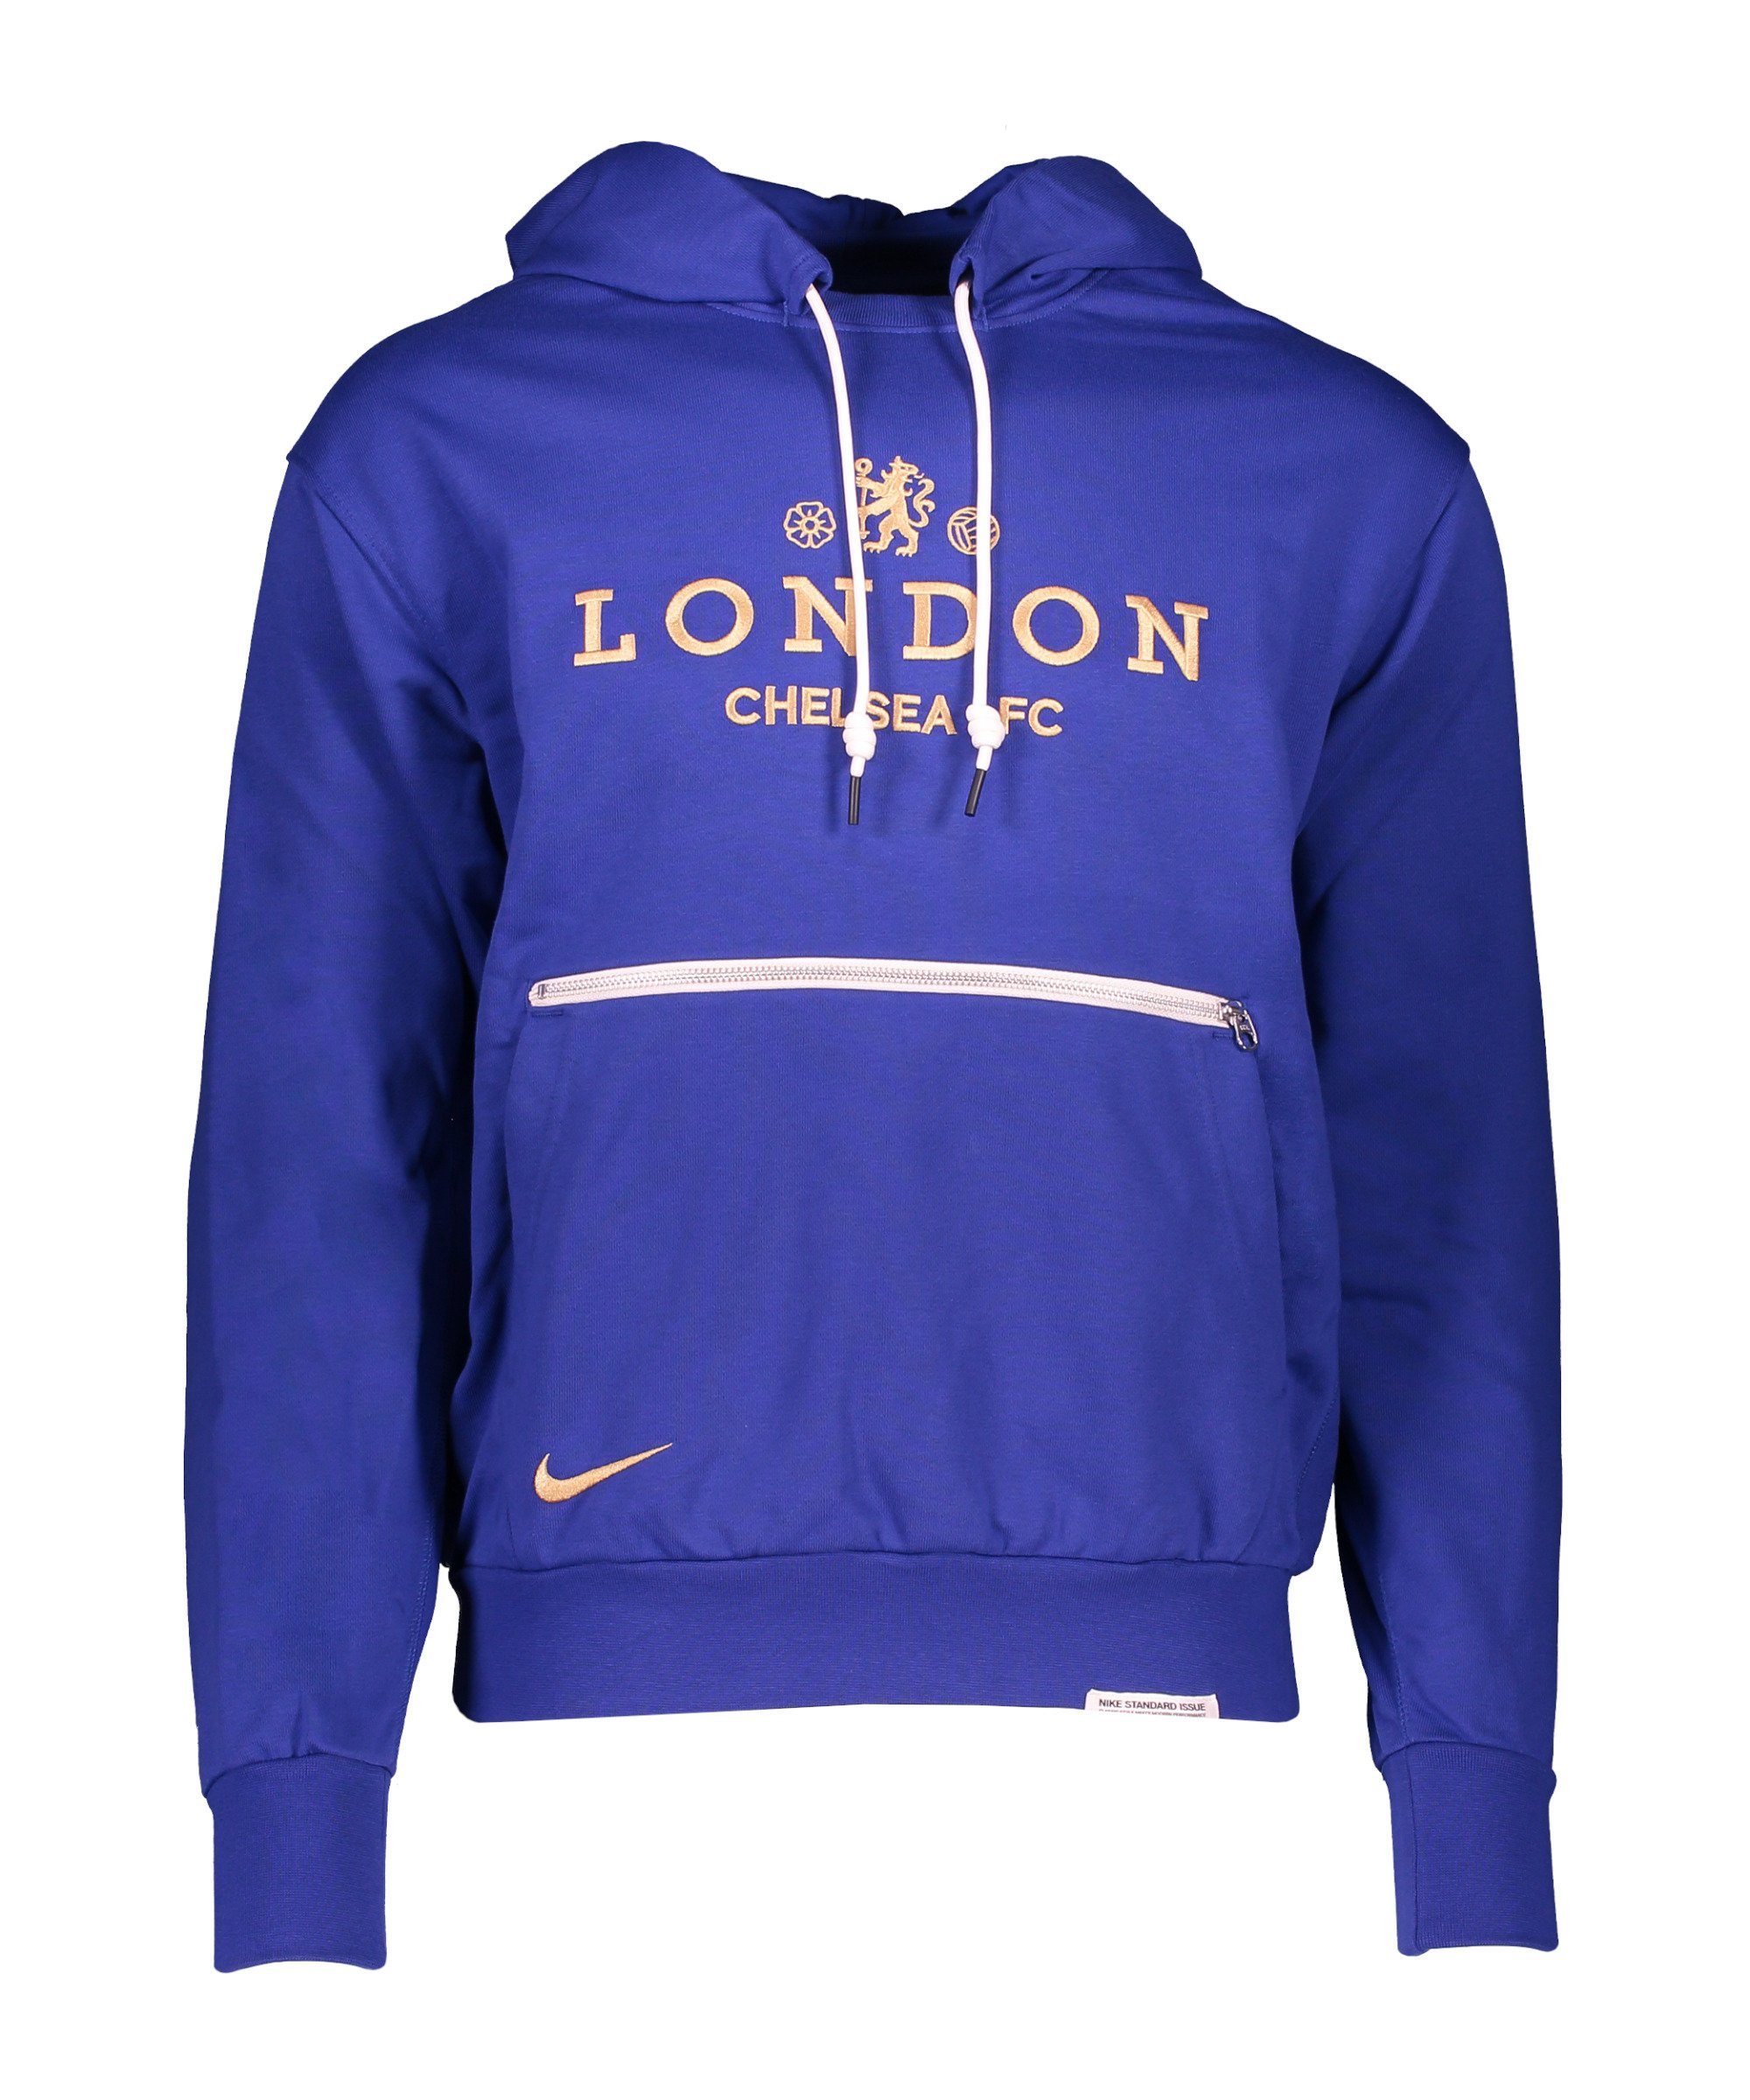 Nike Hoody Sweatshirt London Chelsea FC